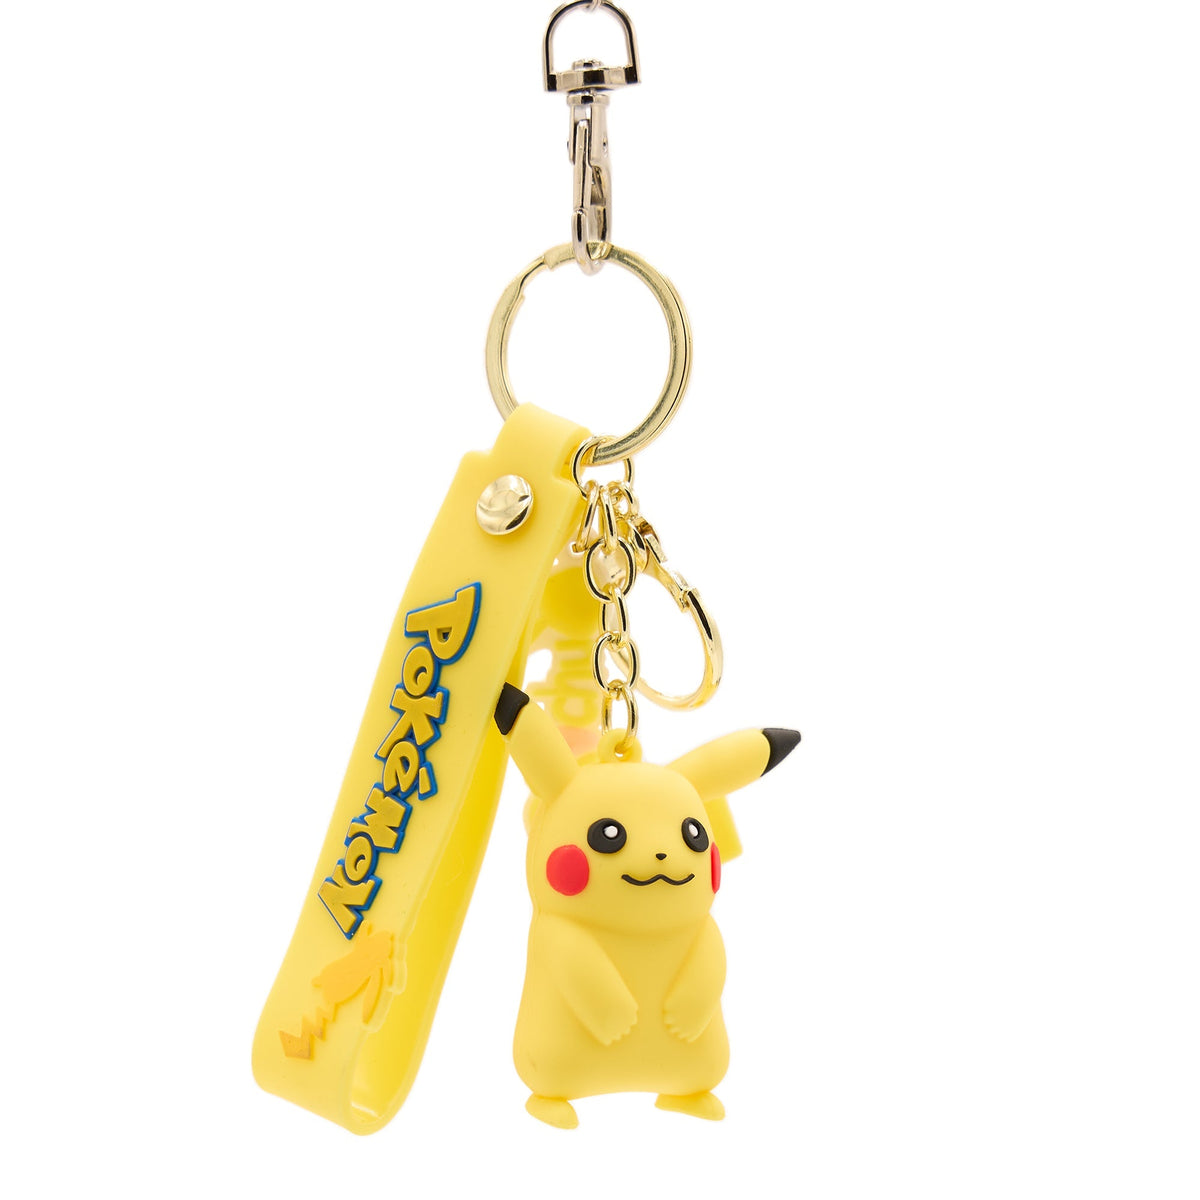 Shenzhen Huiboxin Electronics Co. Ltd Impulse Buying Pikachu Keychain, 1 Count 810120711638